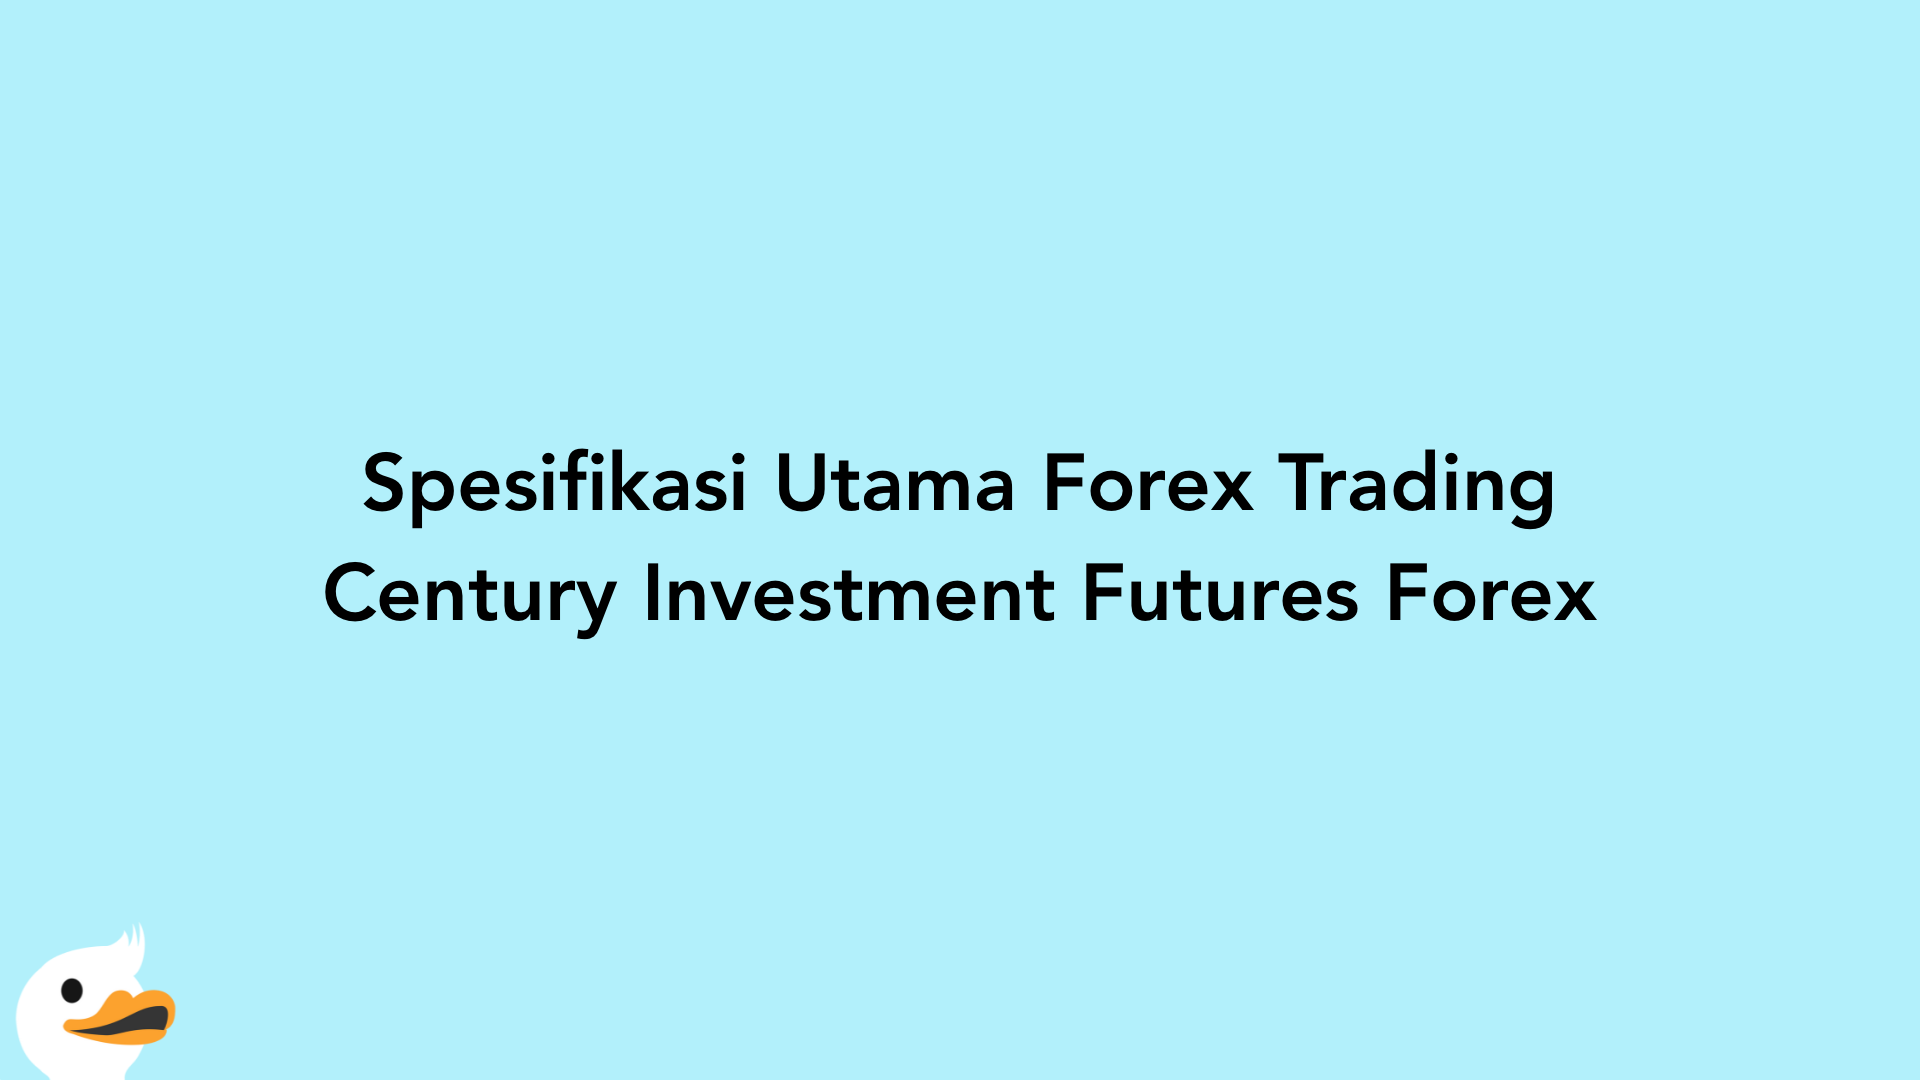 Spesifikasi Utama Forex Trading Century Investment Futures Forex